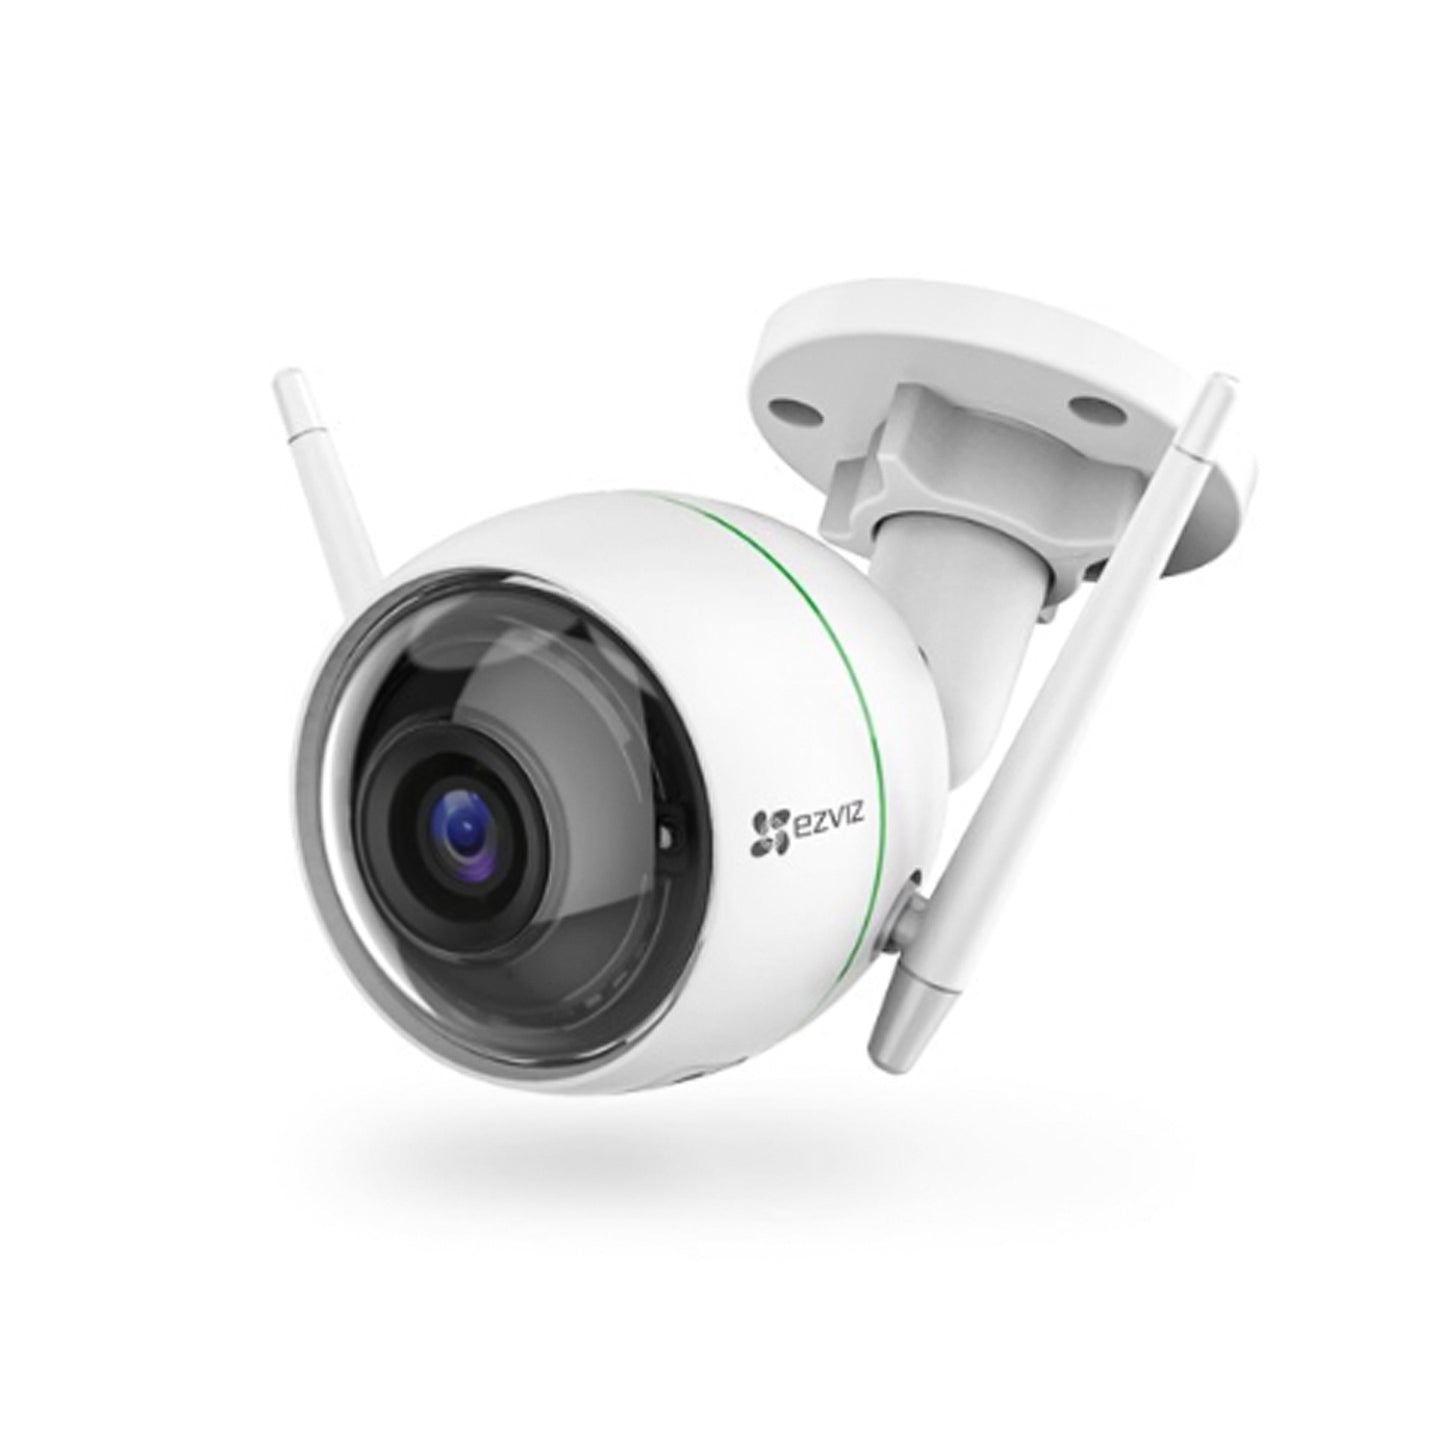 Ezviz C3WN Wi-Fi video surveillance camera, waterproof security camera, 1080p night vision camera, smart home camera